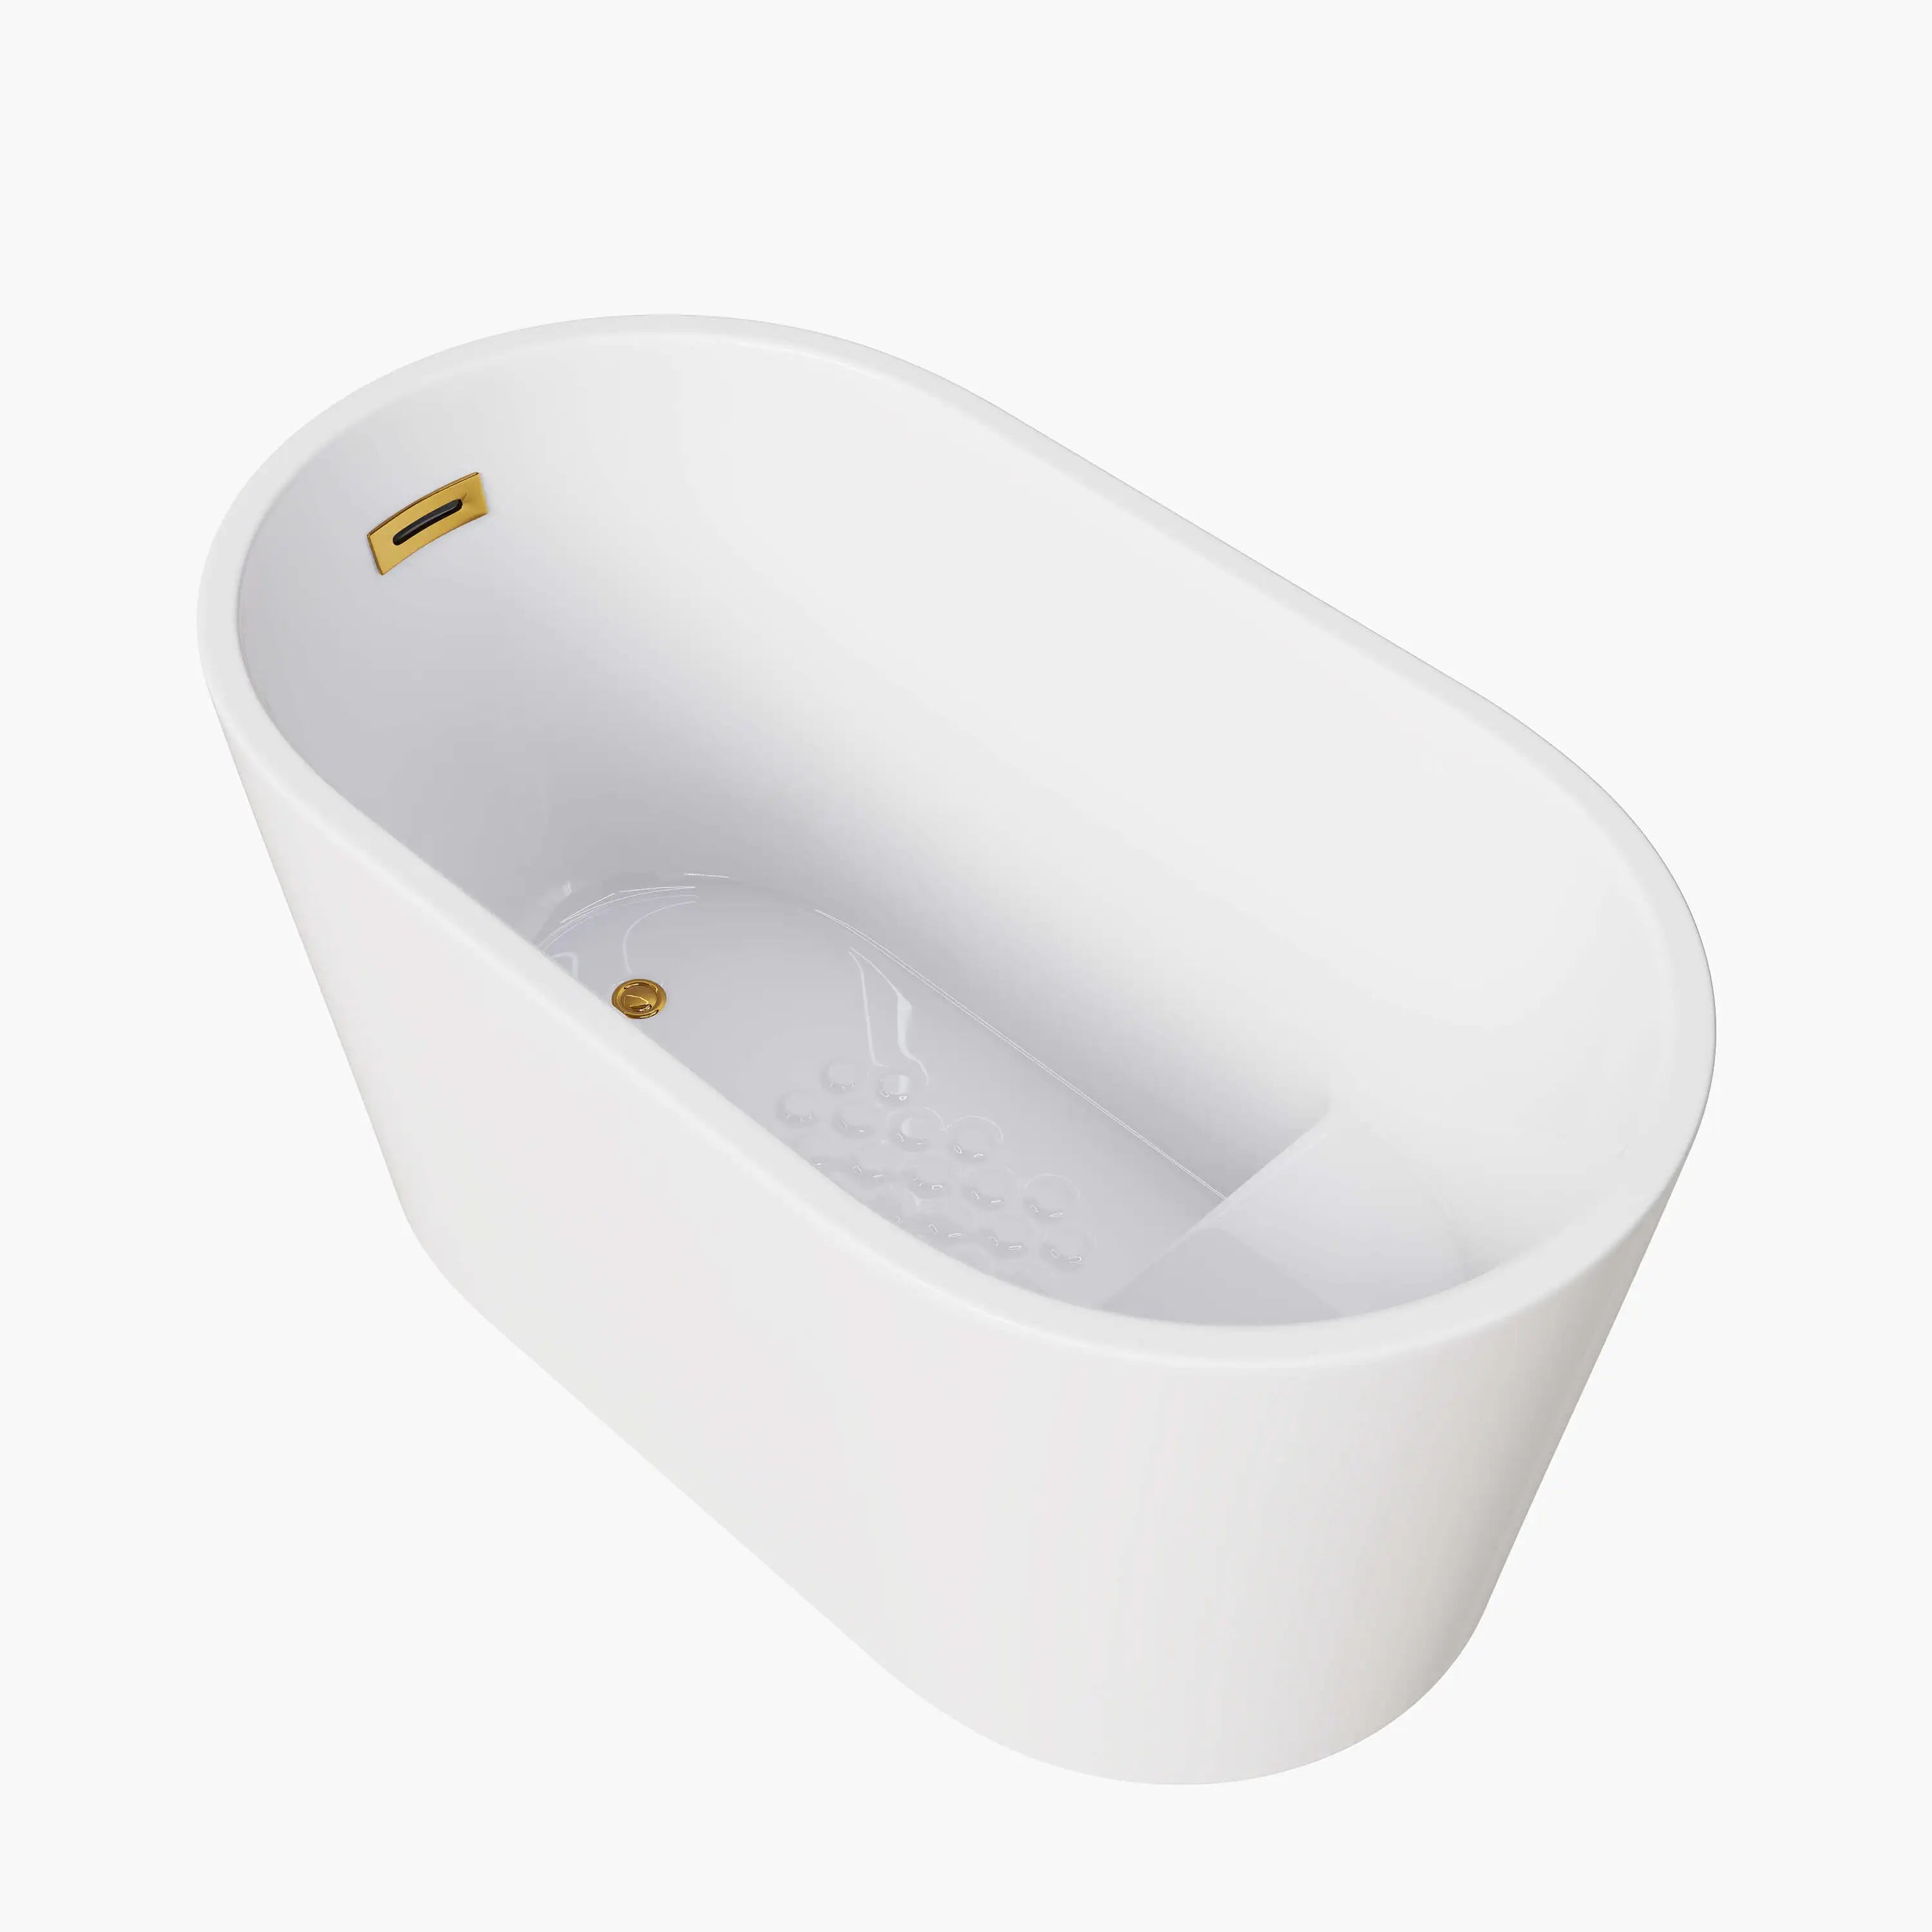 HOROW 47 Inch Deep Soaking Tub Freestanding Acrylic Bathtub Model TU47-SG